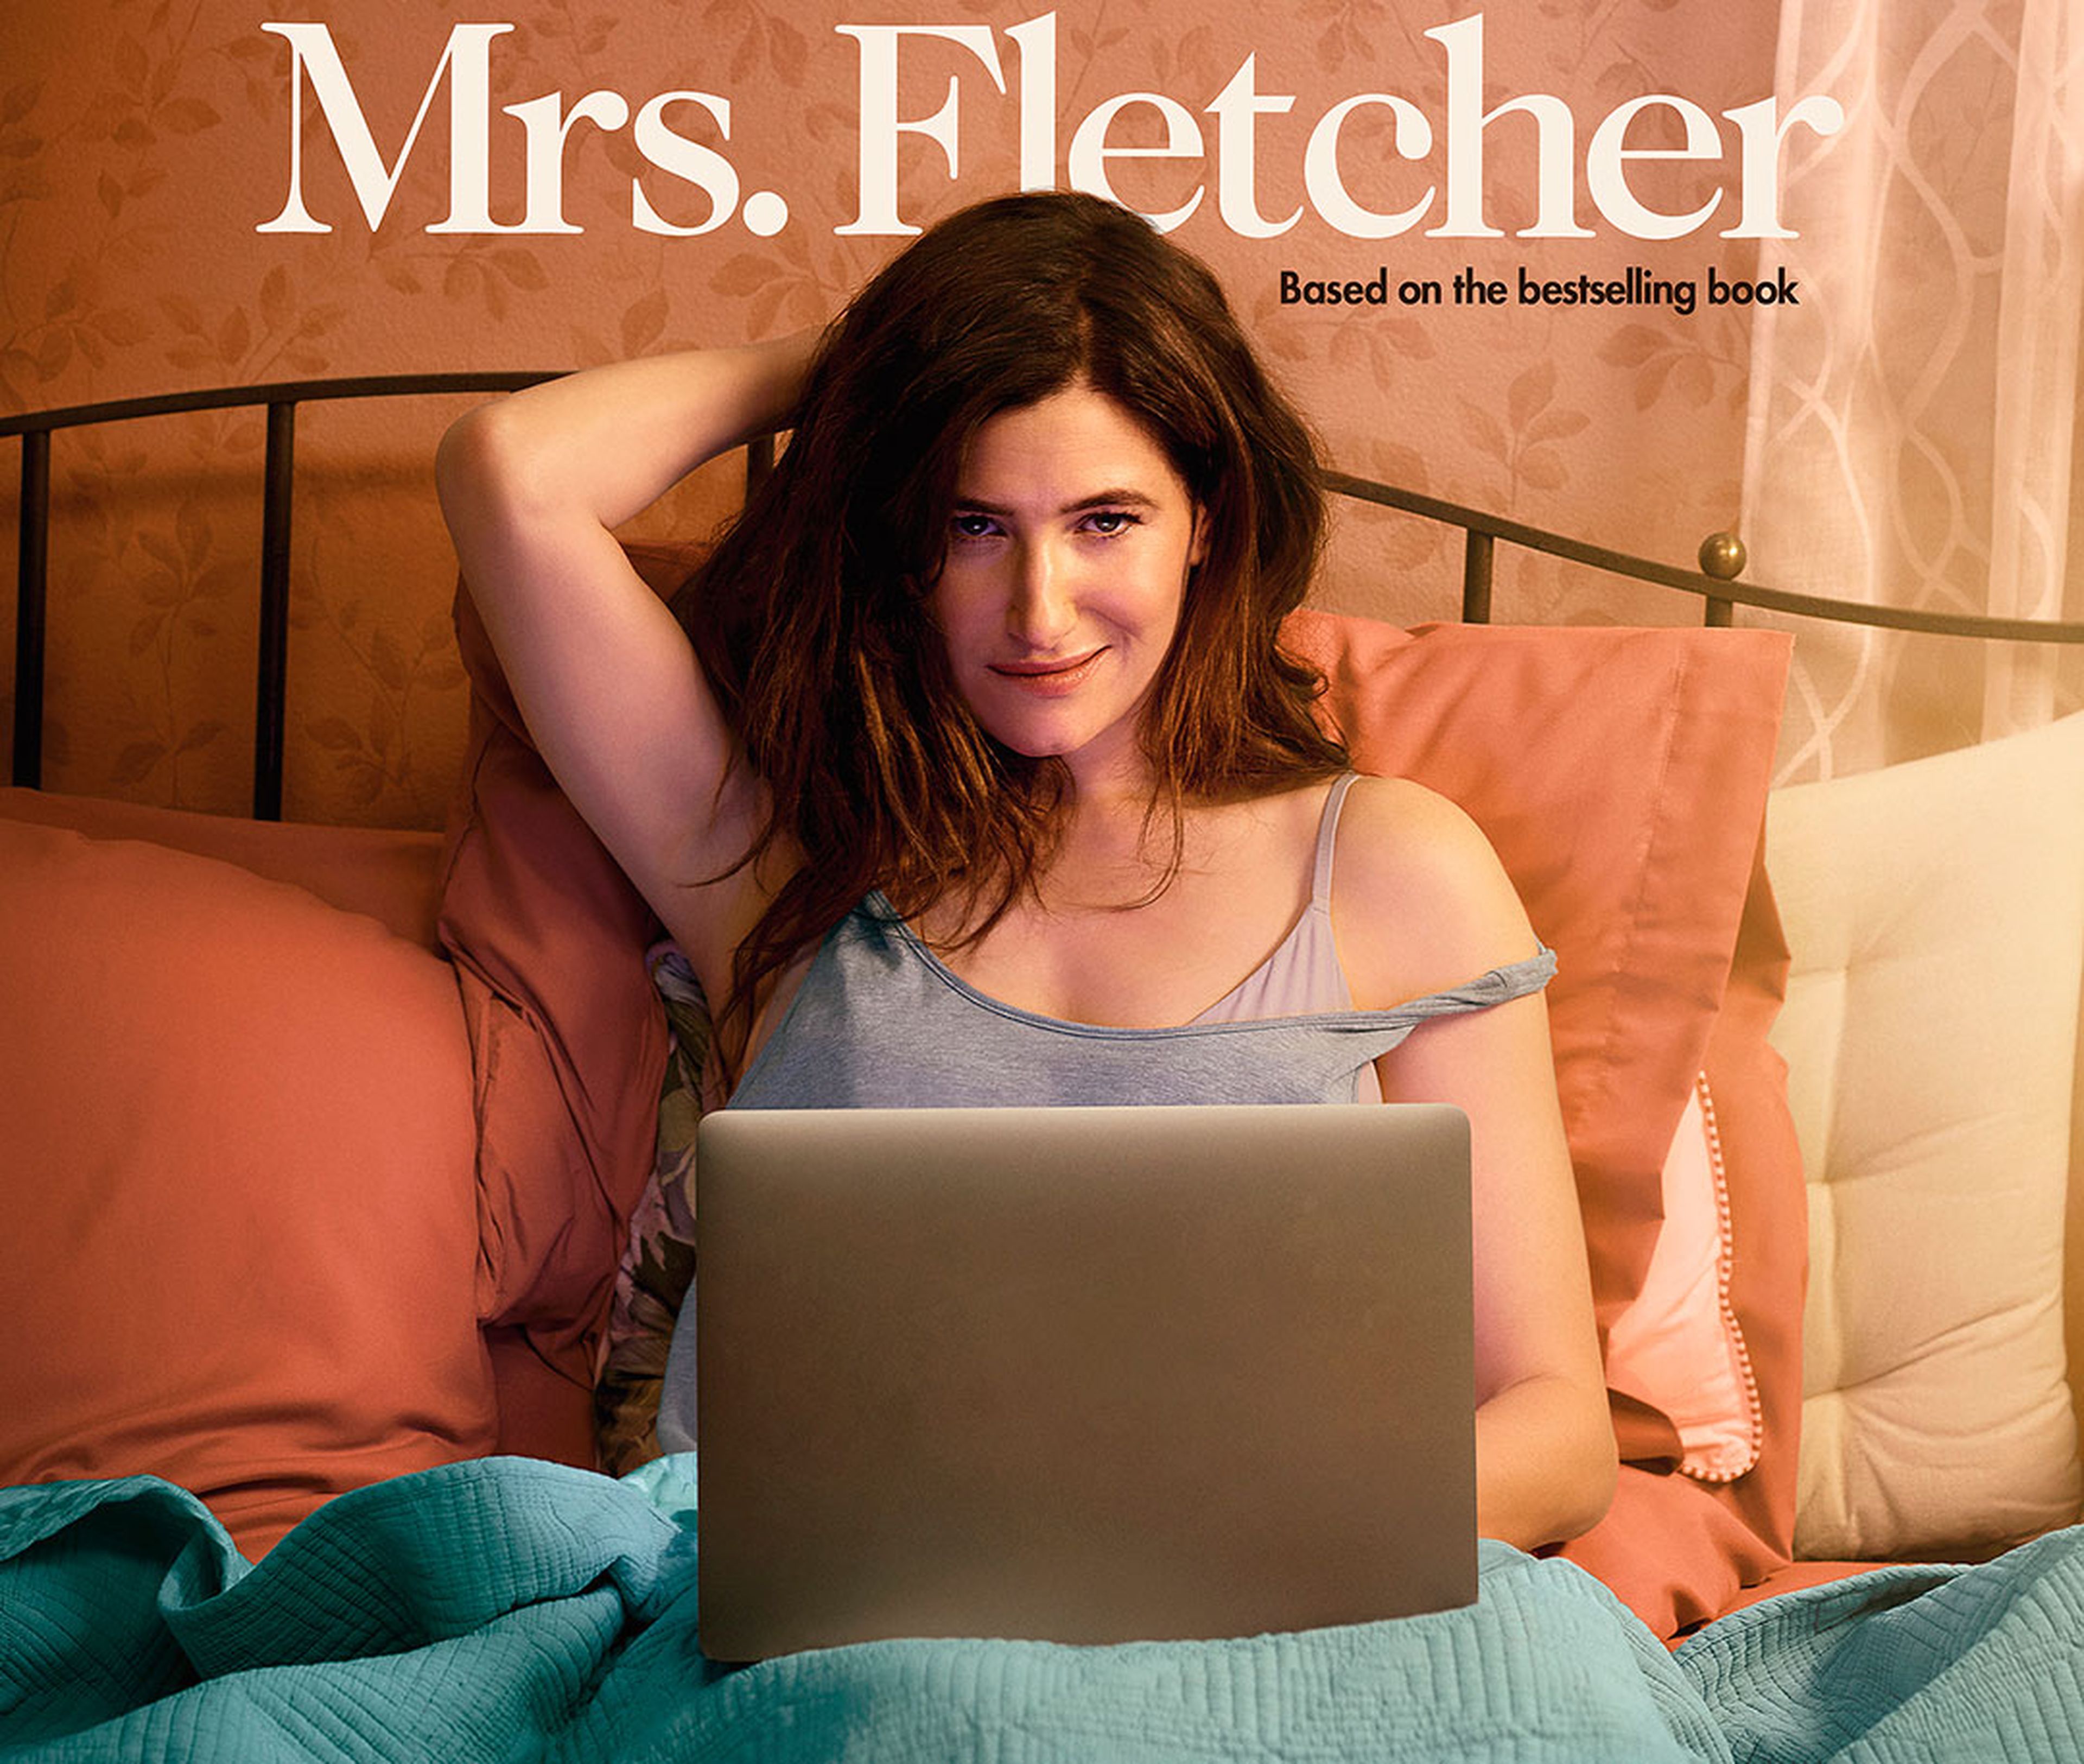 La señora Fletcher, serie de HBO